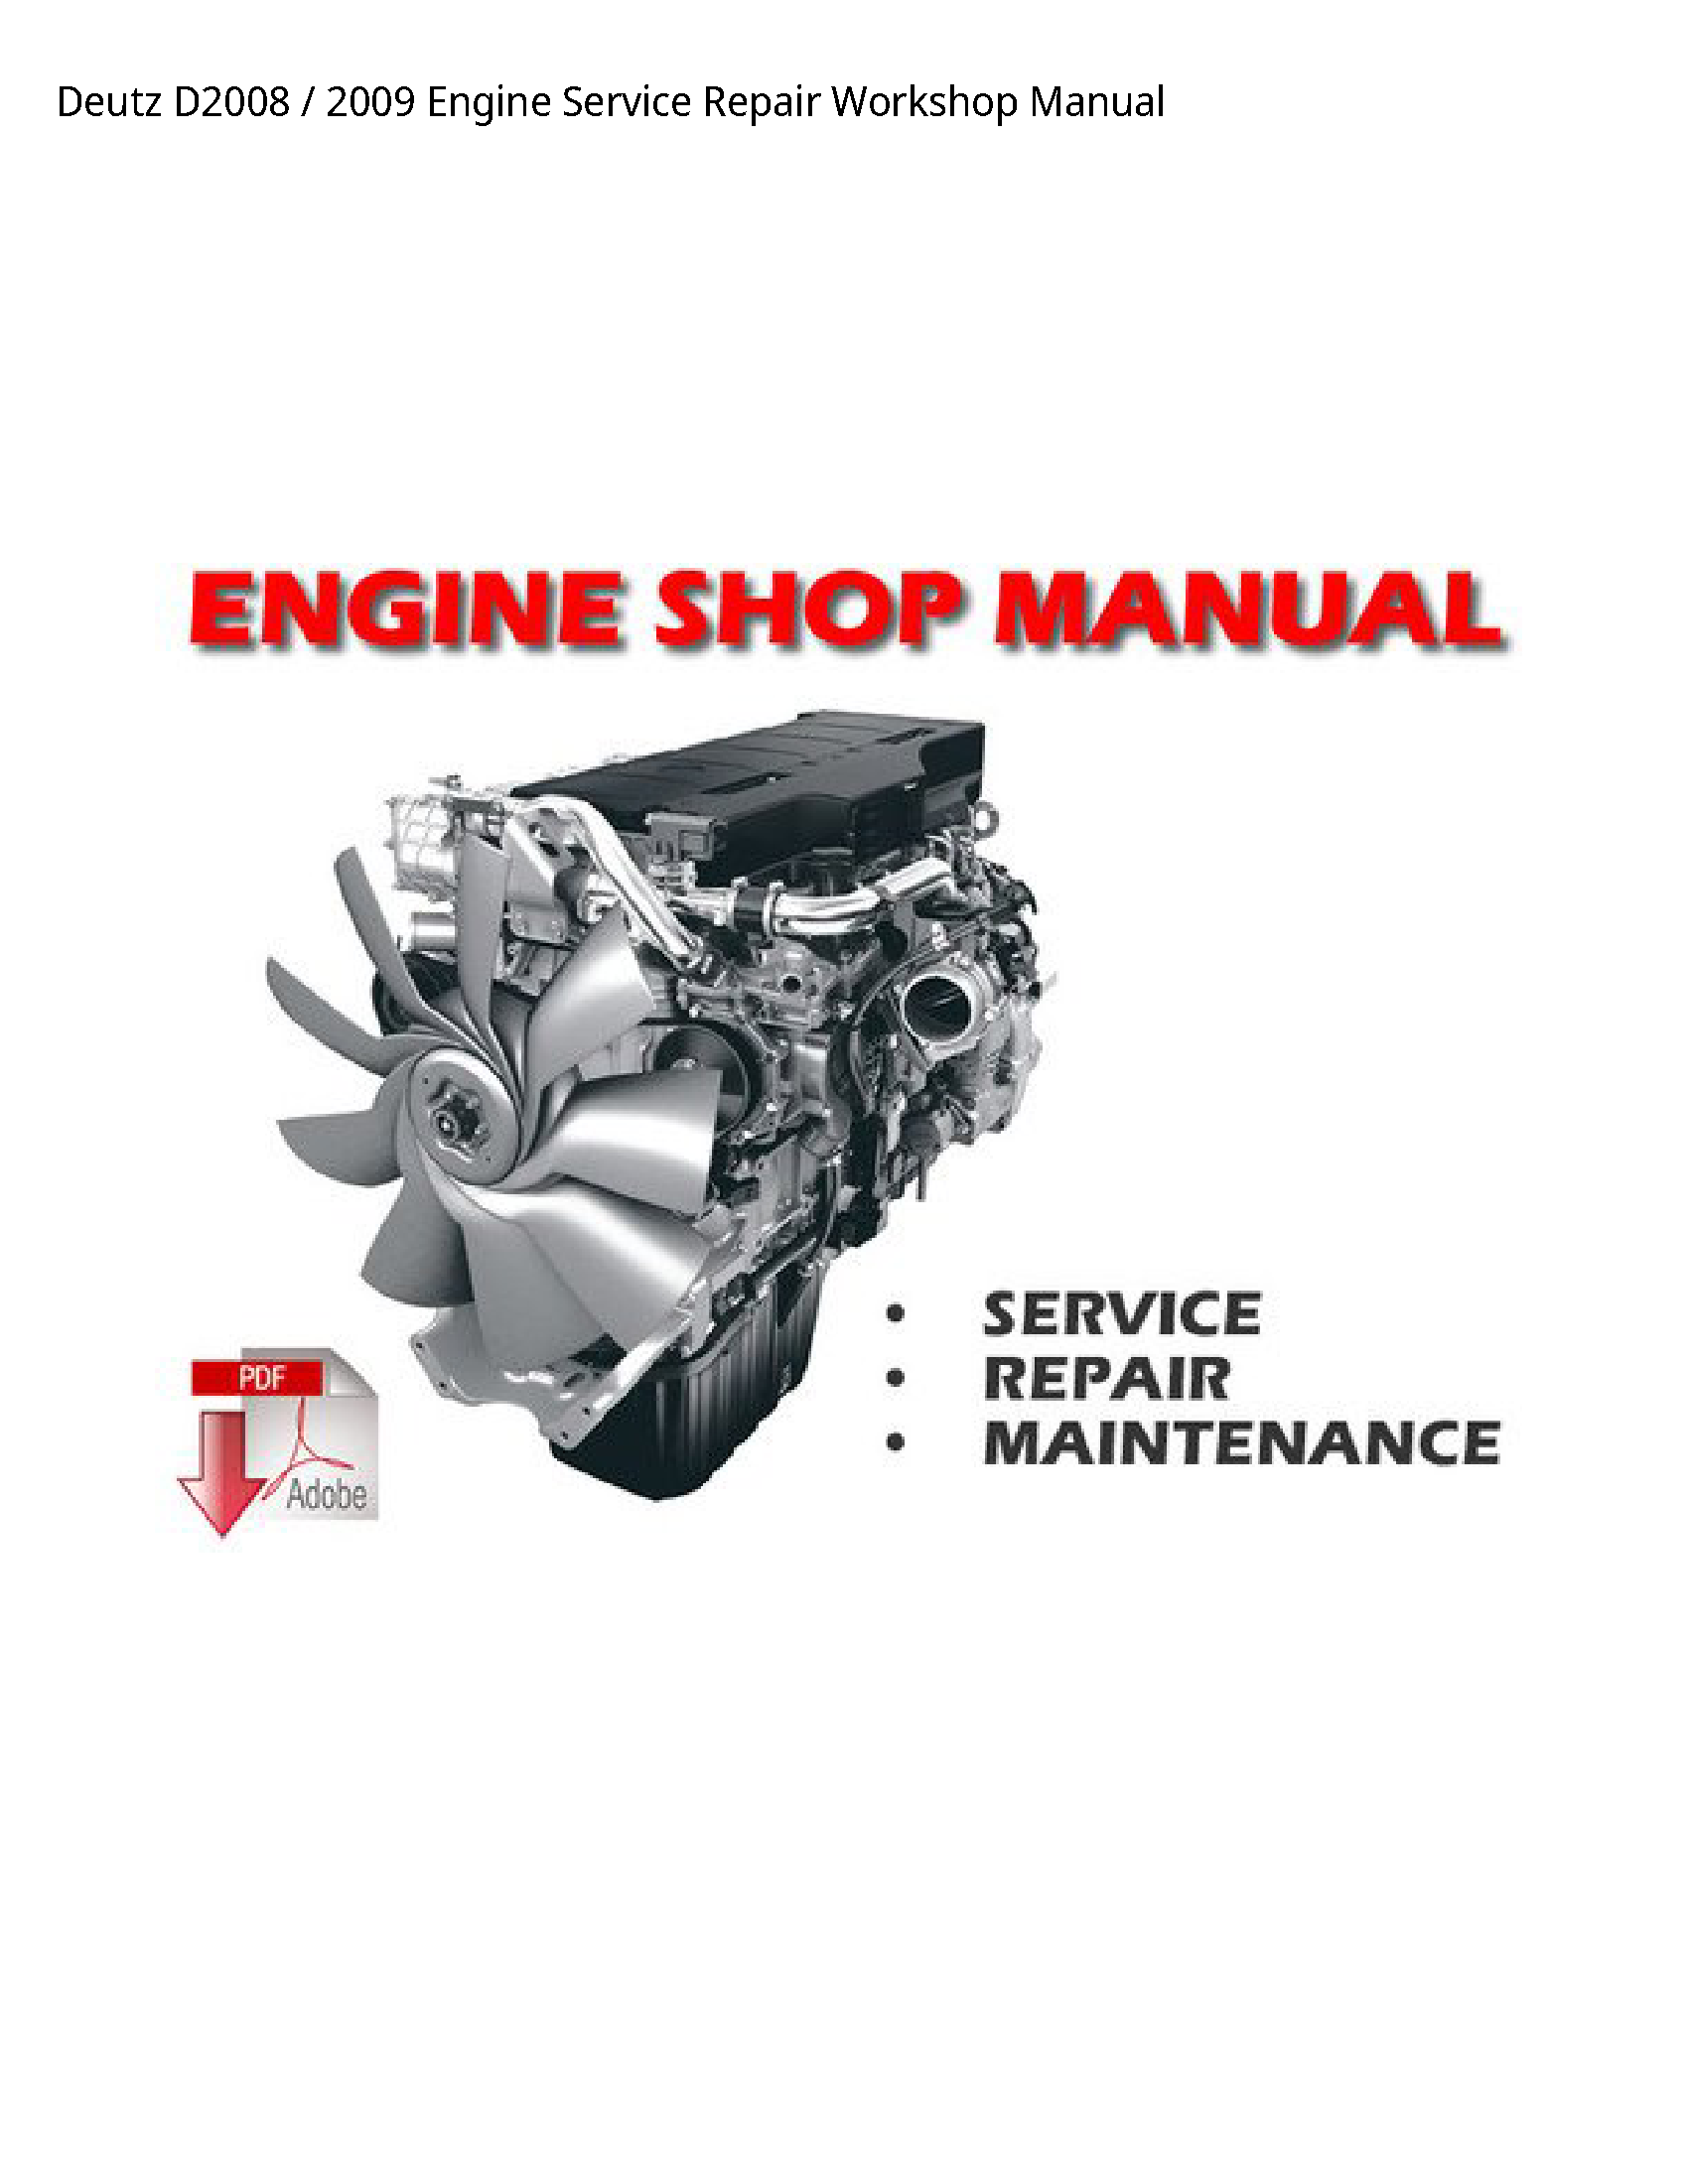 Deutz D2008 Engine manual